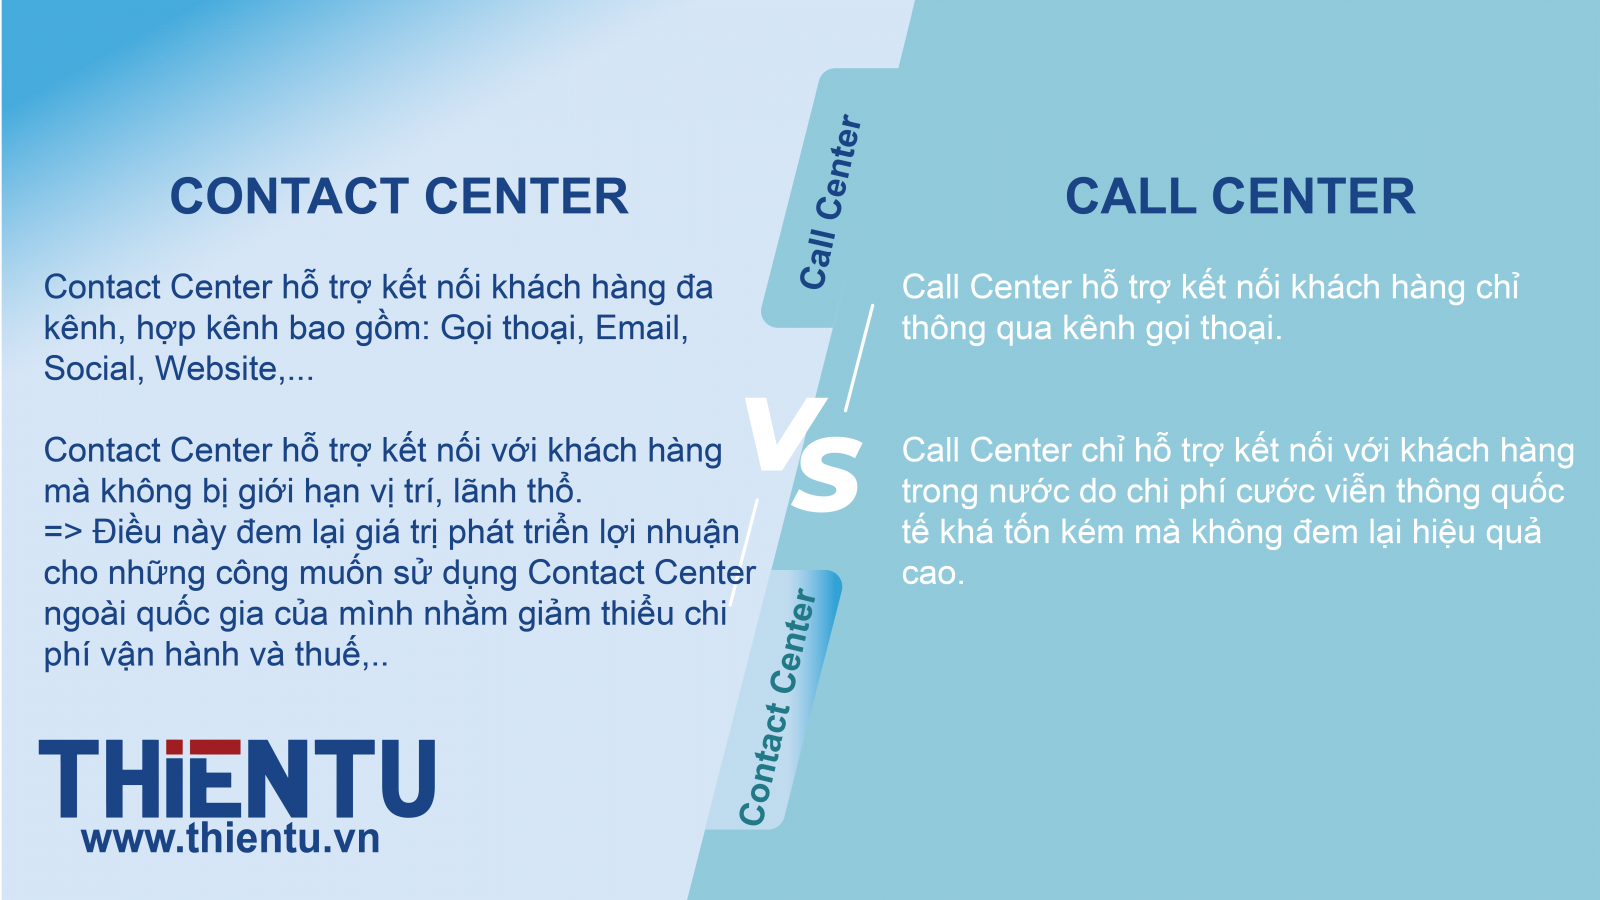 Điểm khác nhau của Call Center VS Contact Center